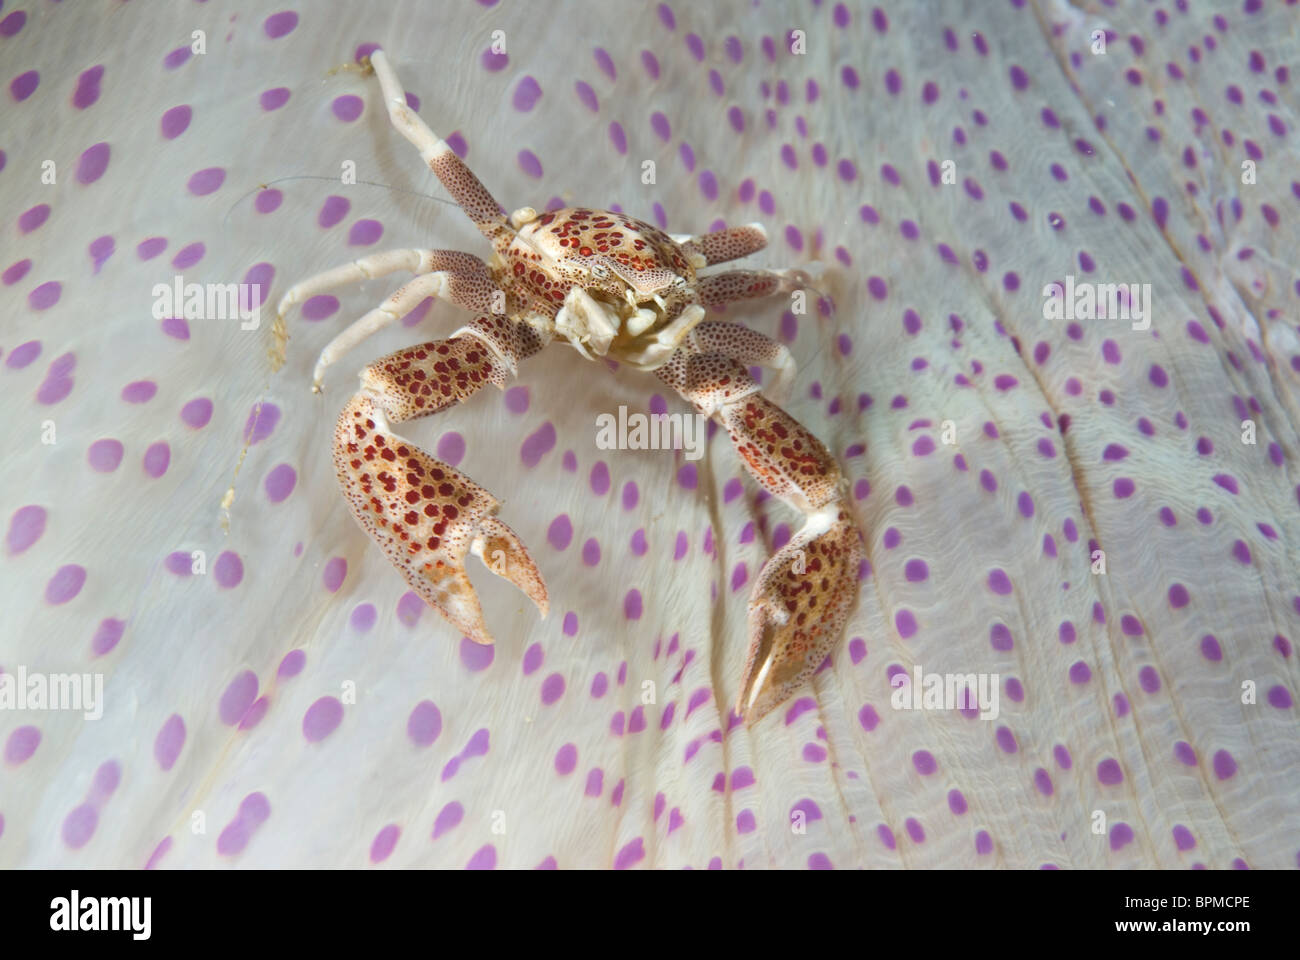 Porcelain anemone crab, Neopetrolisthes oshimai, Puetro Galera, Philippines, Pacific Ocean. Stock Photo